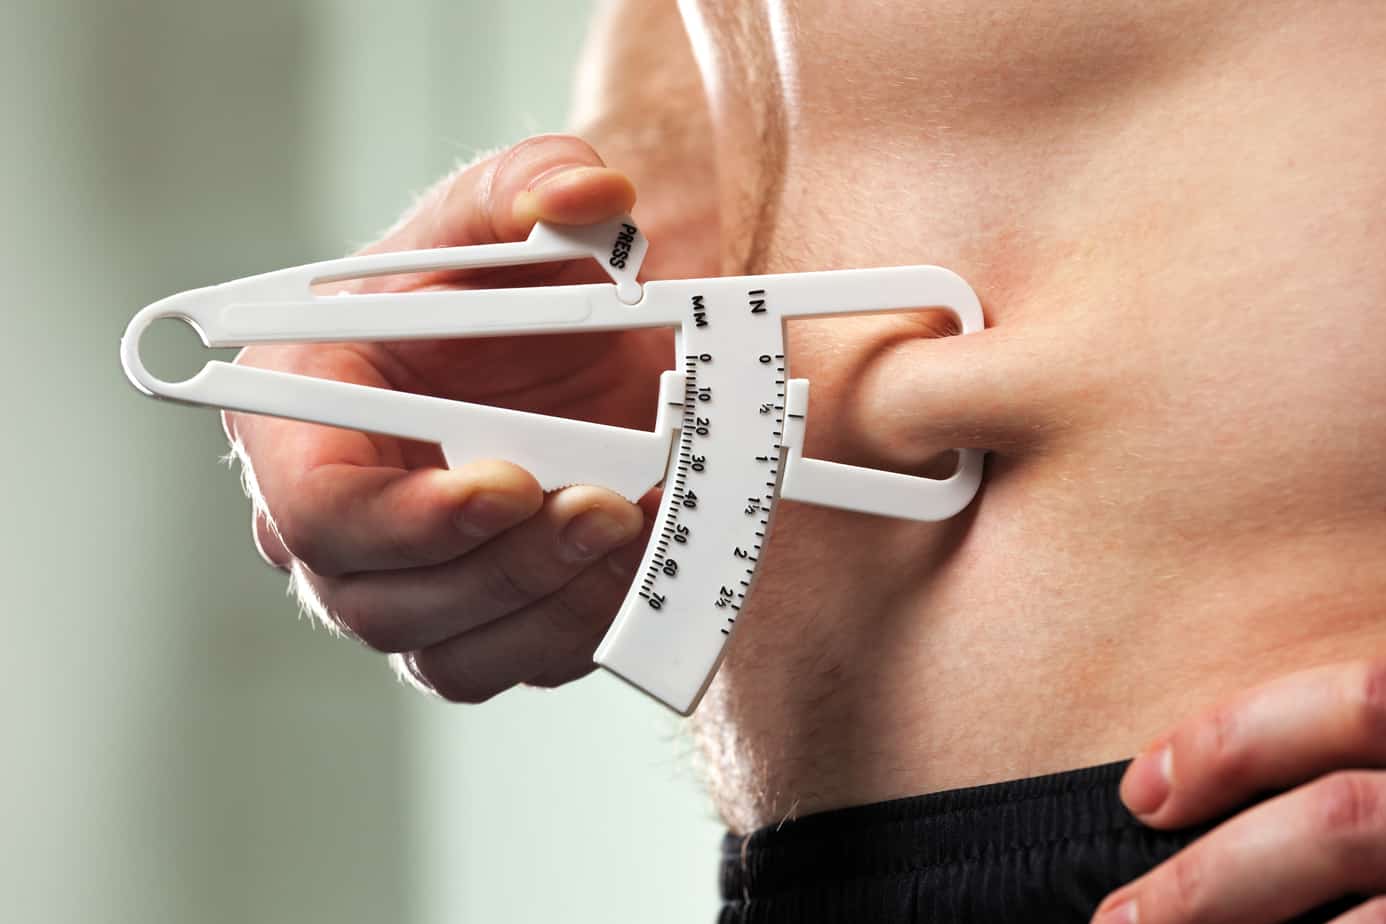 Skinfold measurement in nutrition studies